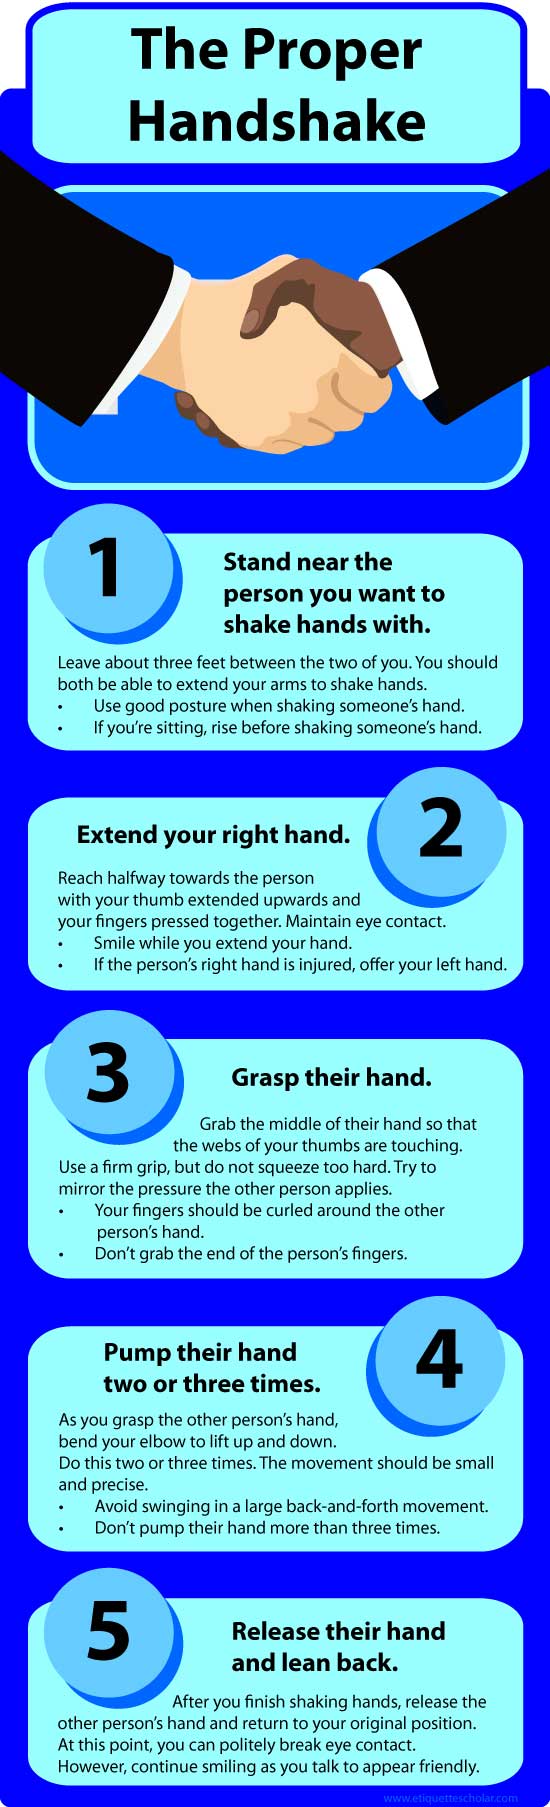 The Handshake Etiquette Guide!